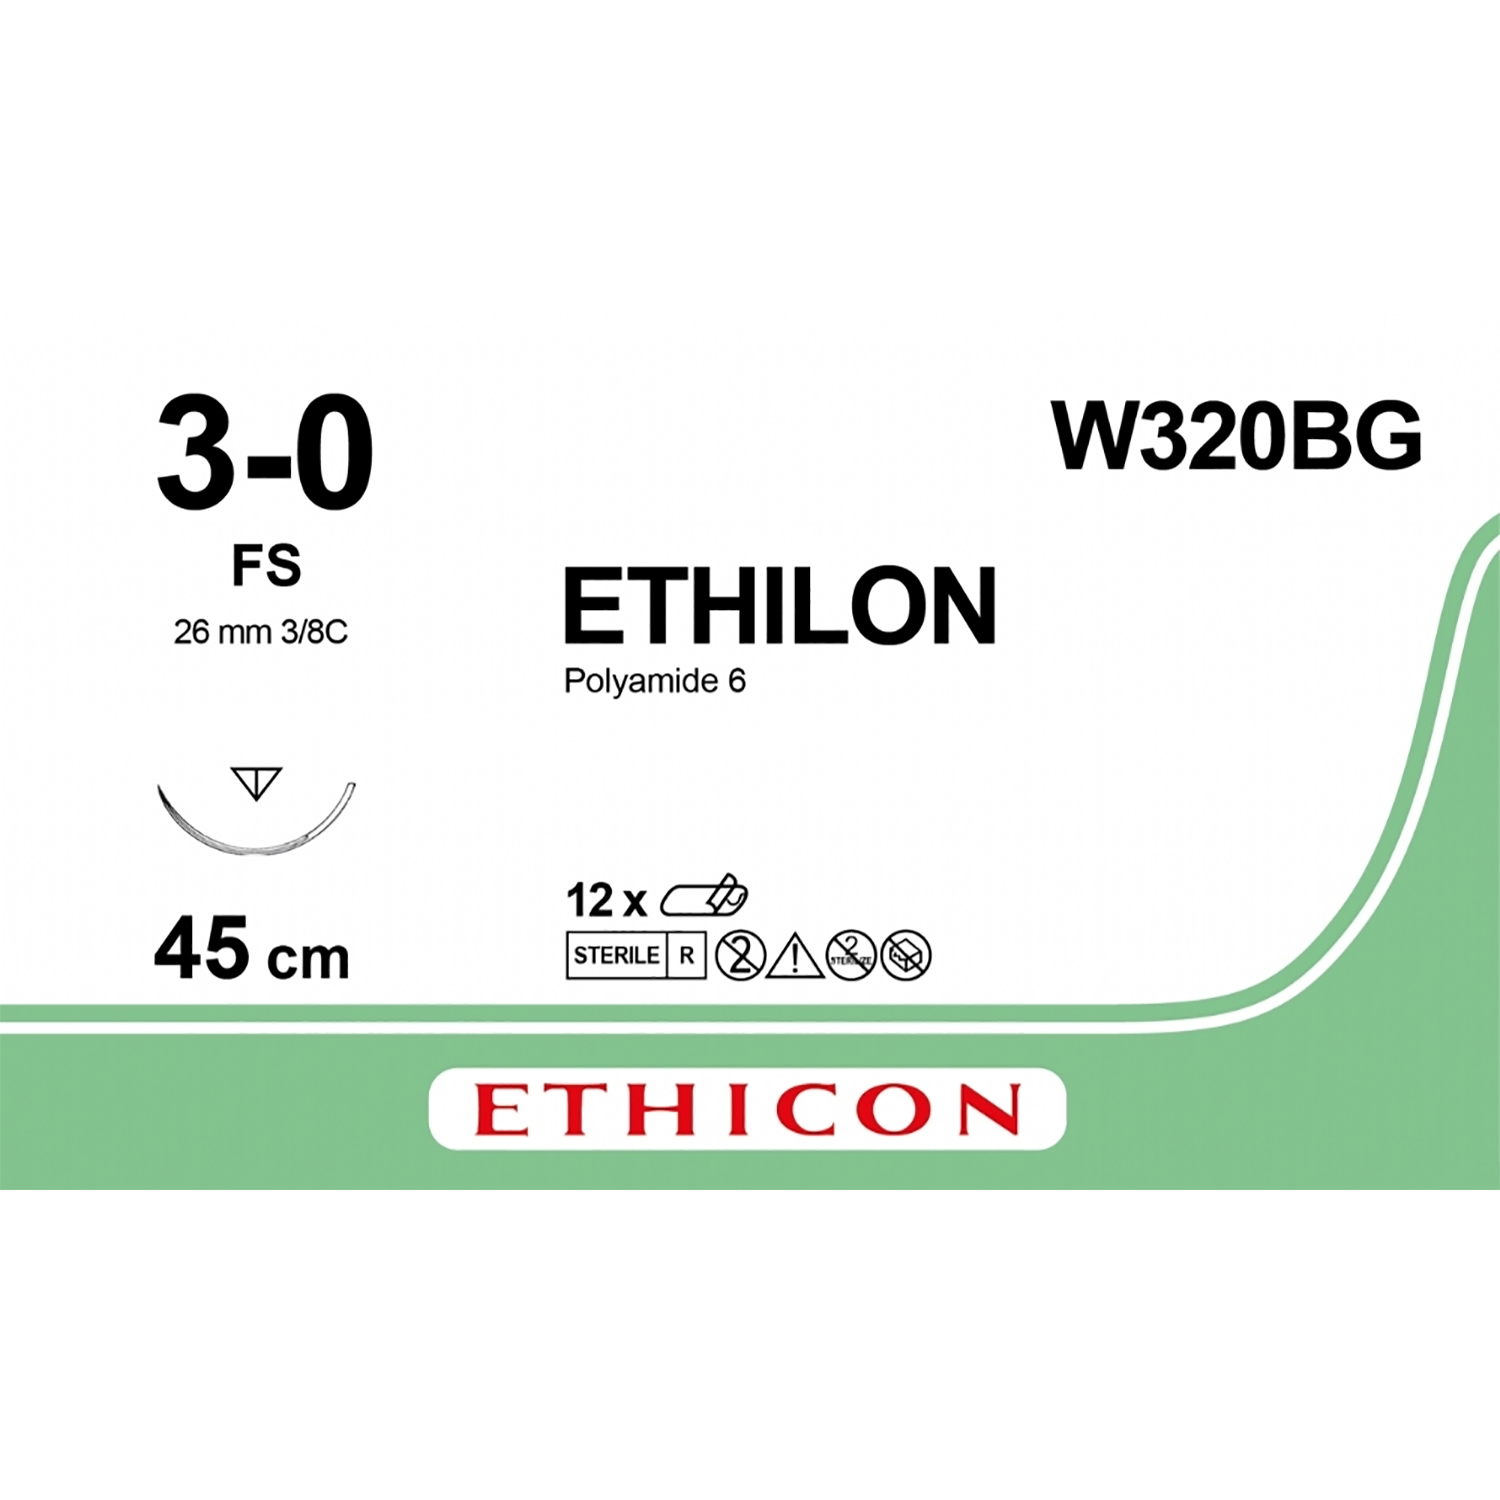 Ethilon Sutures | Polyamide | Black 45cm, M2 USP3-0 S/A FS | Pack of 12